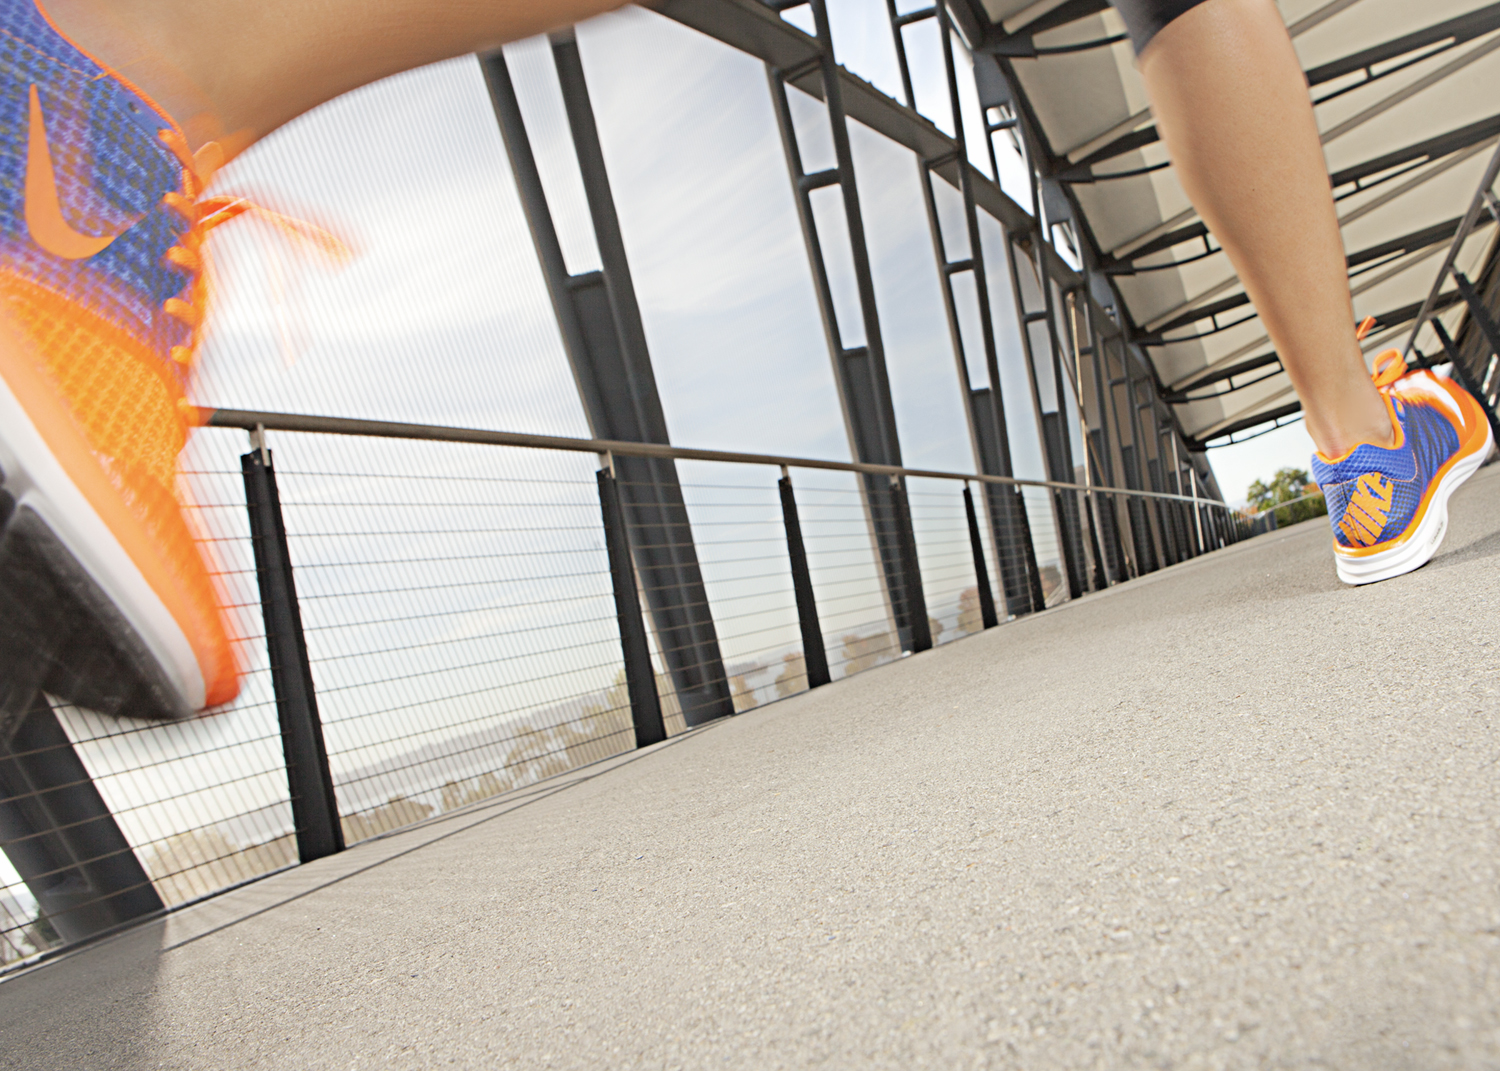 Close up of runner's feet wearing orange and blue Nike running sneakers, running down urban walkway